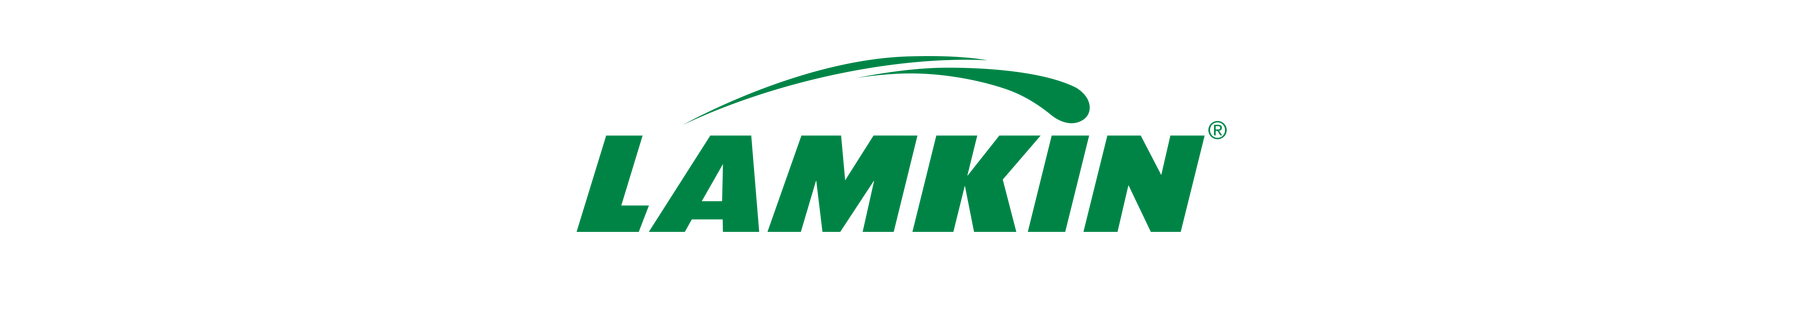 Lamkin-Logo-1color-RGBmod